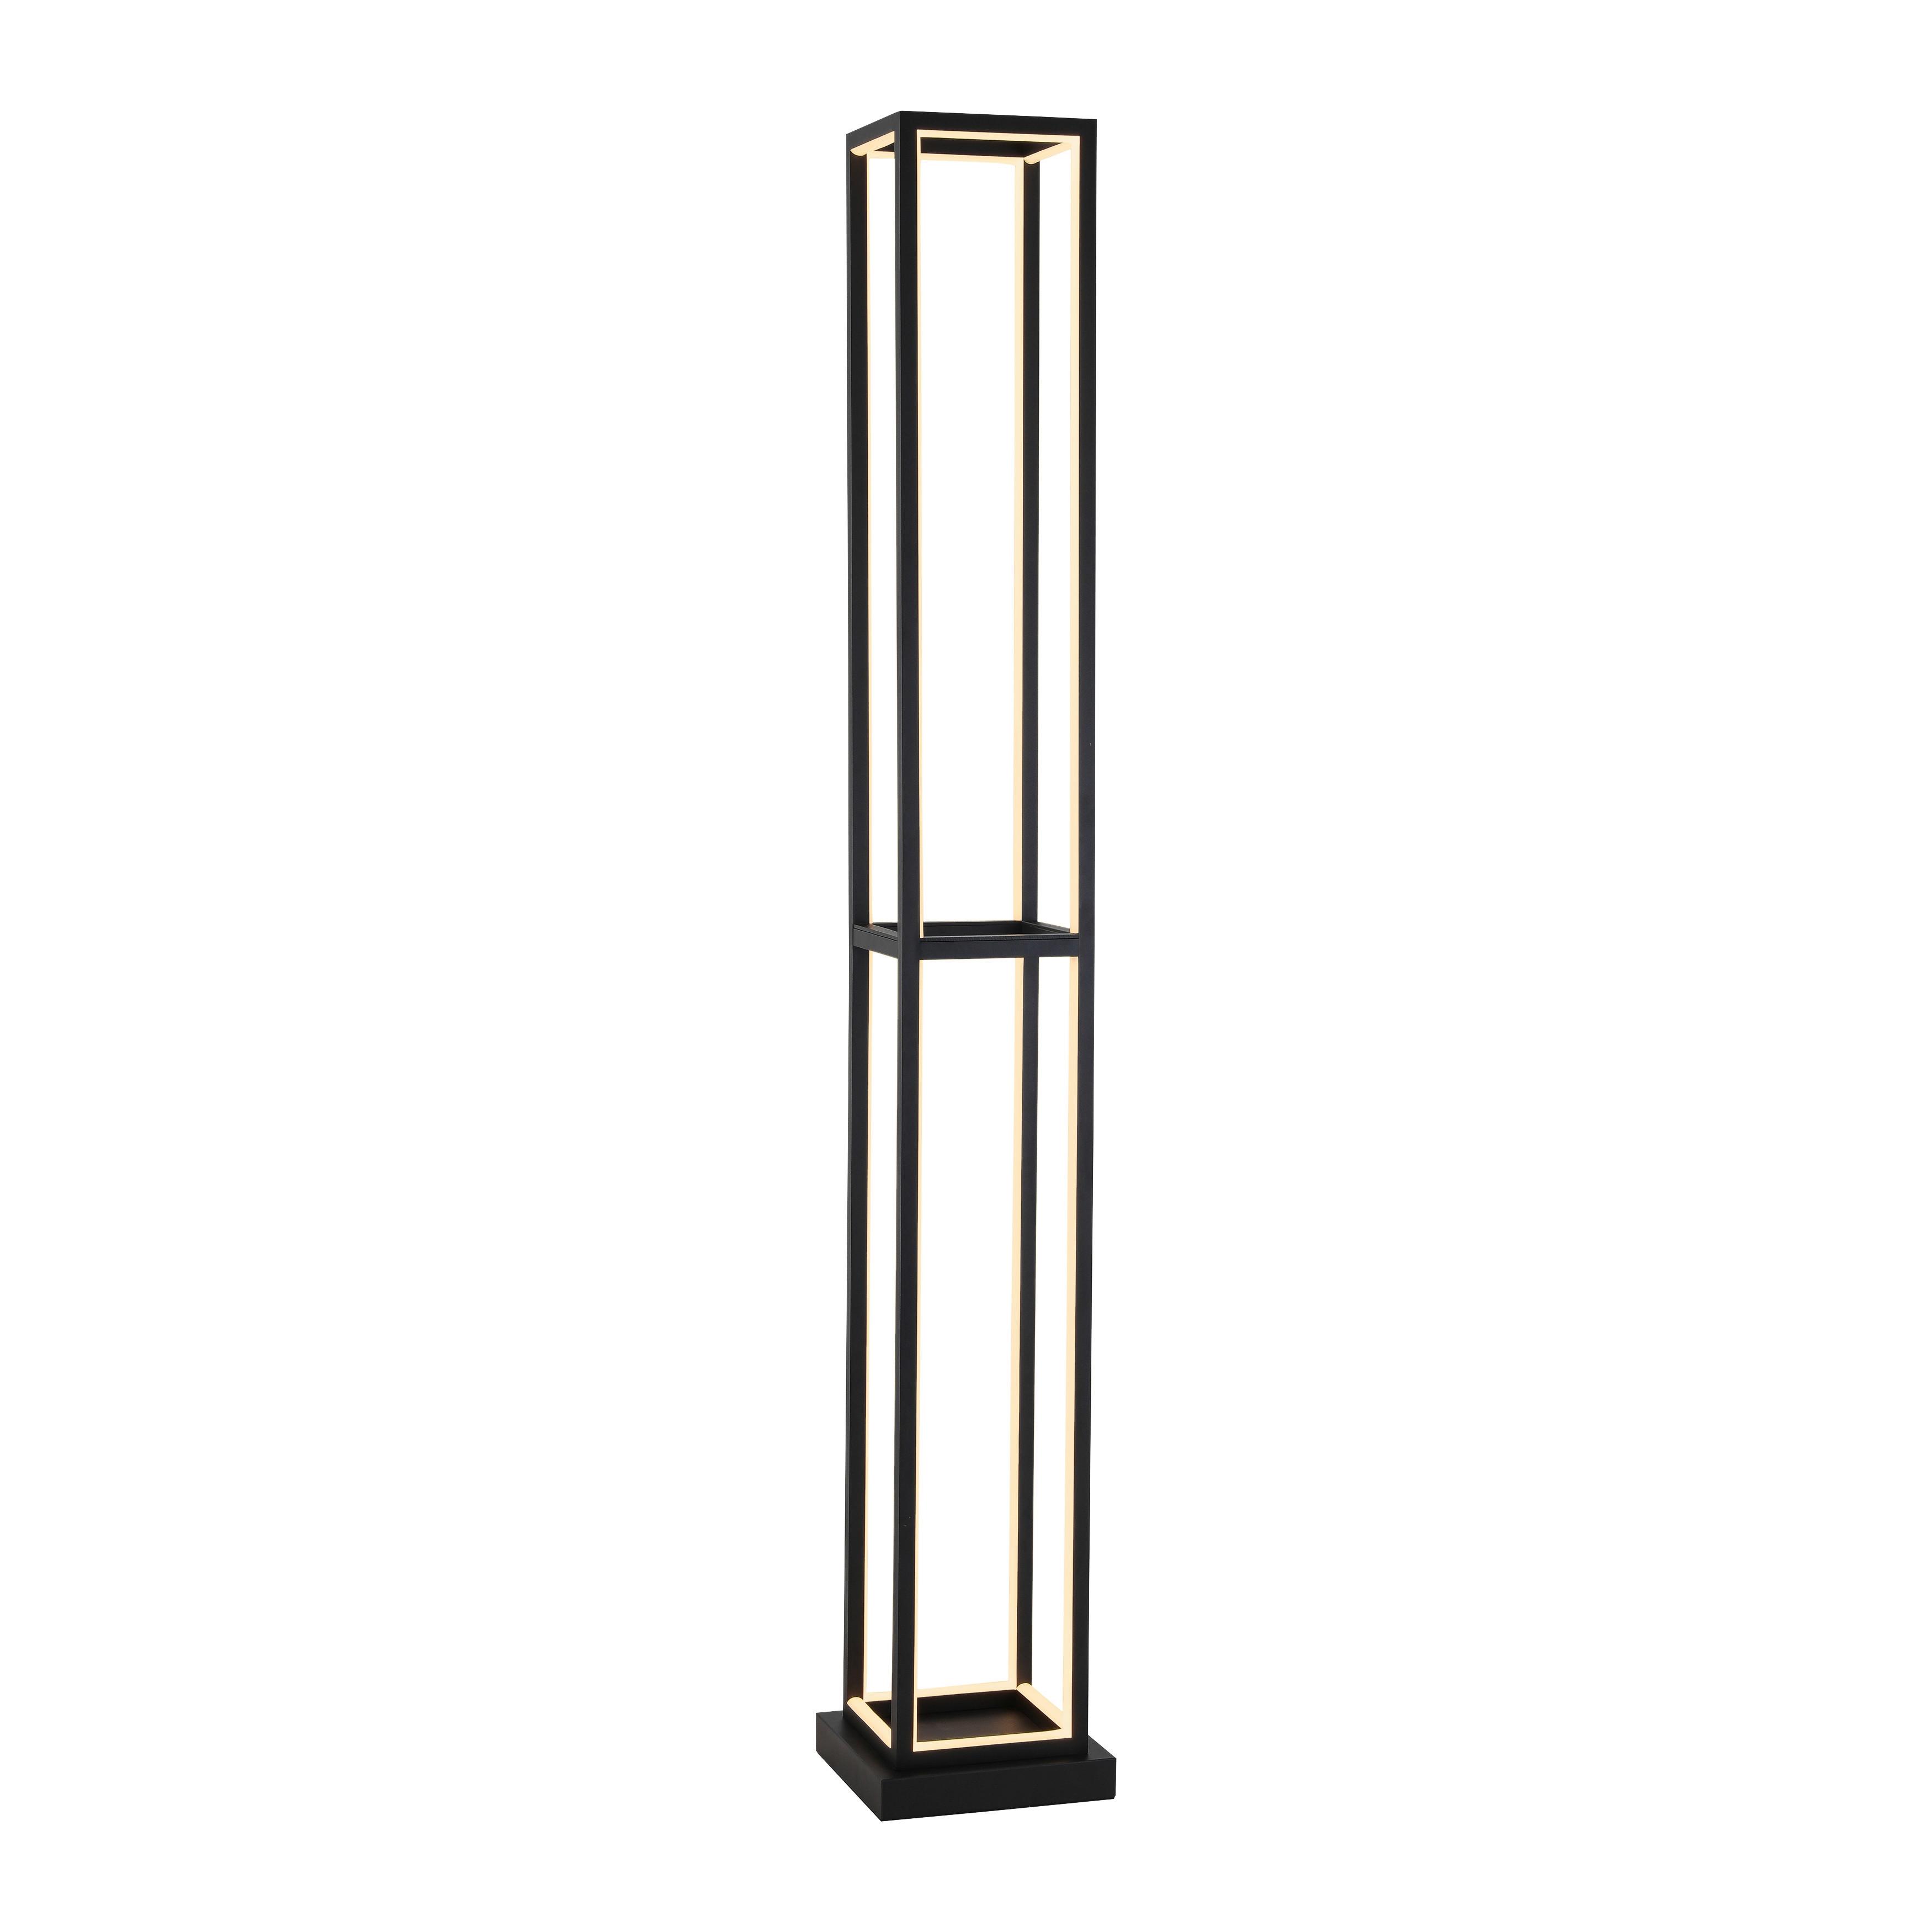 Led-stojaca Lampa Max. 1,34 Watt - čierna, Moderný, kov/plast (22/22/150cm) - Bessagi Home